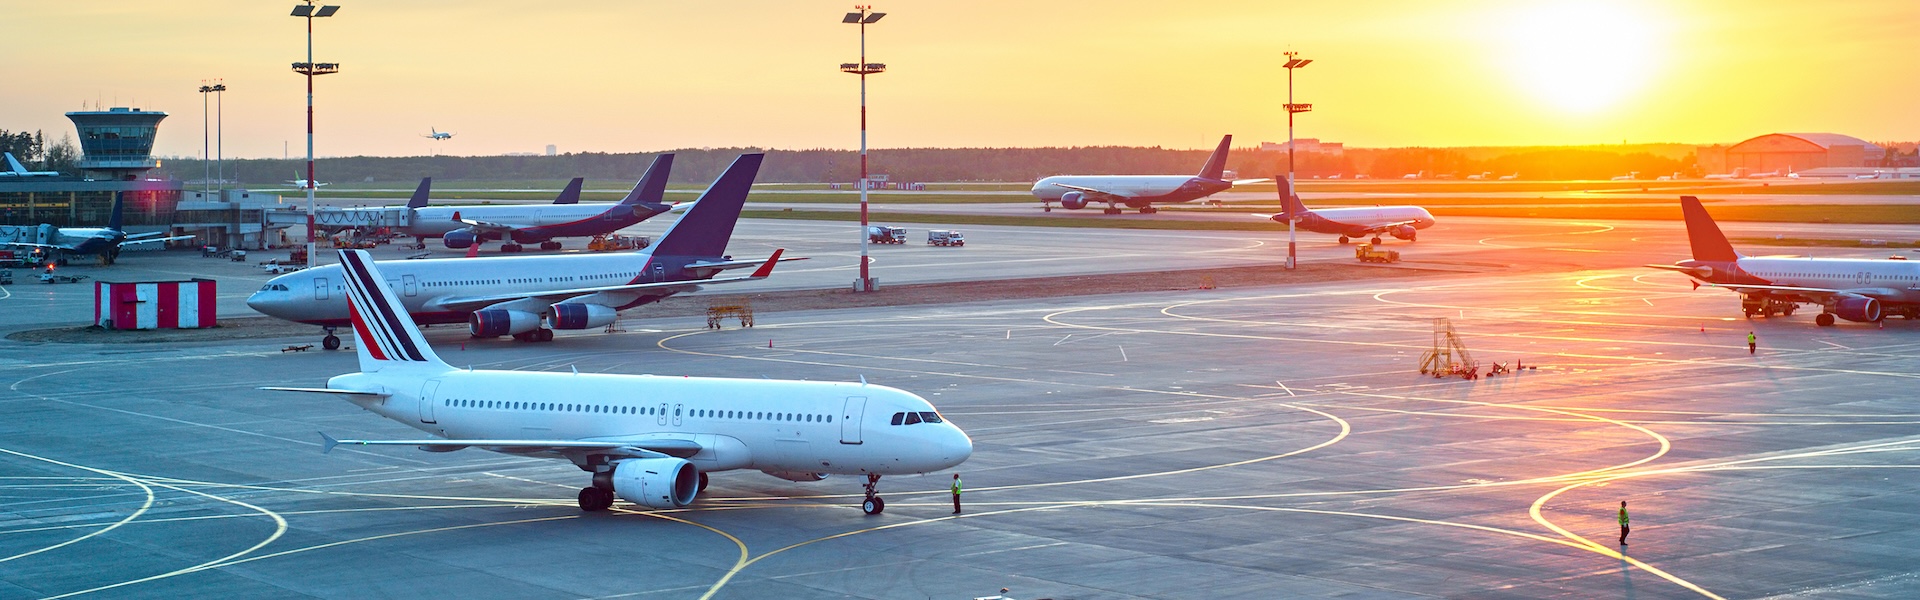 Air travel Australia Tourism and Transport Forum